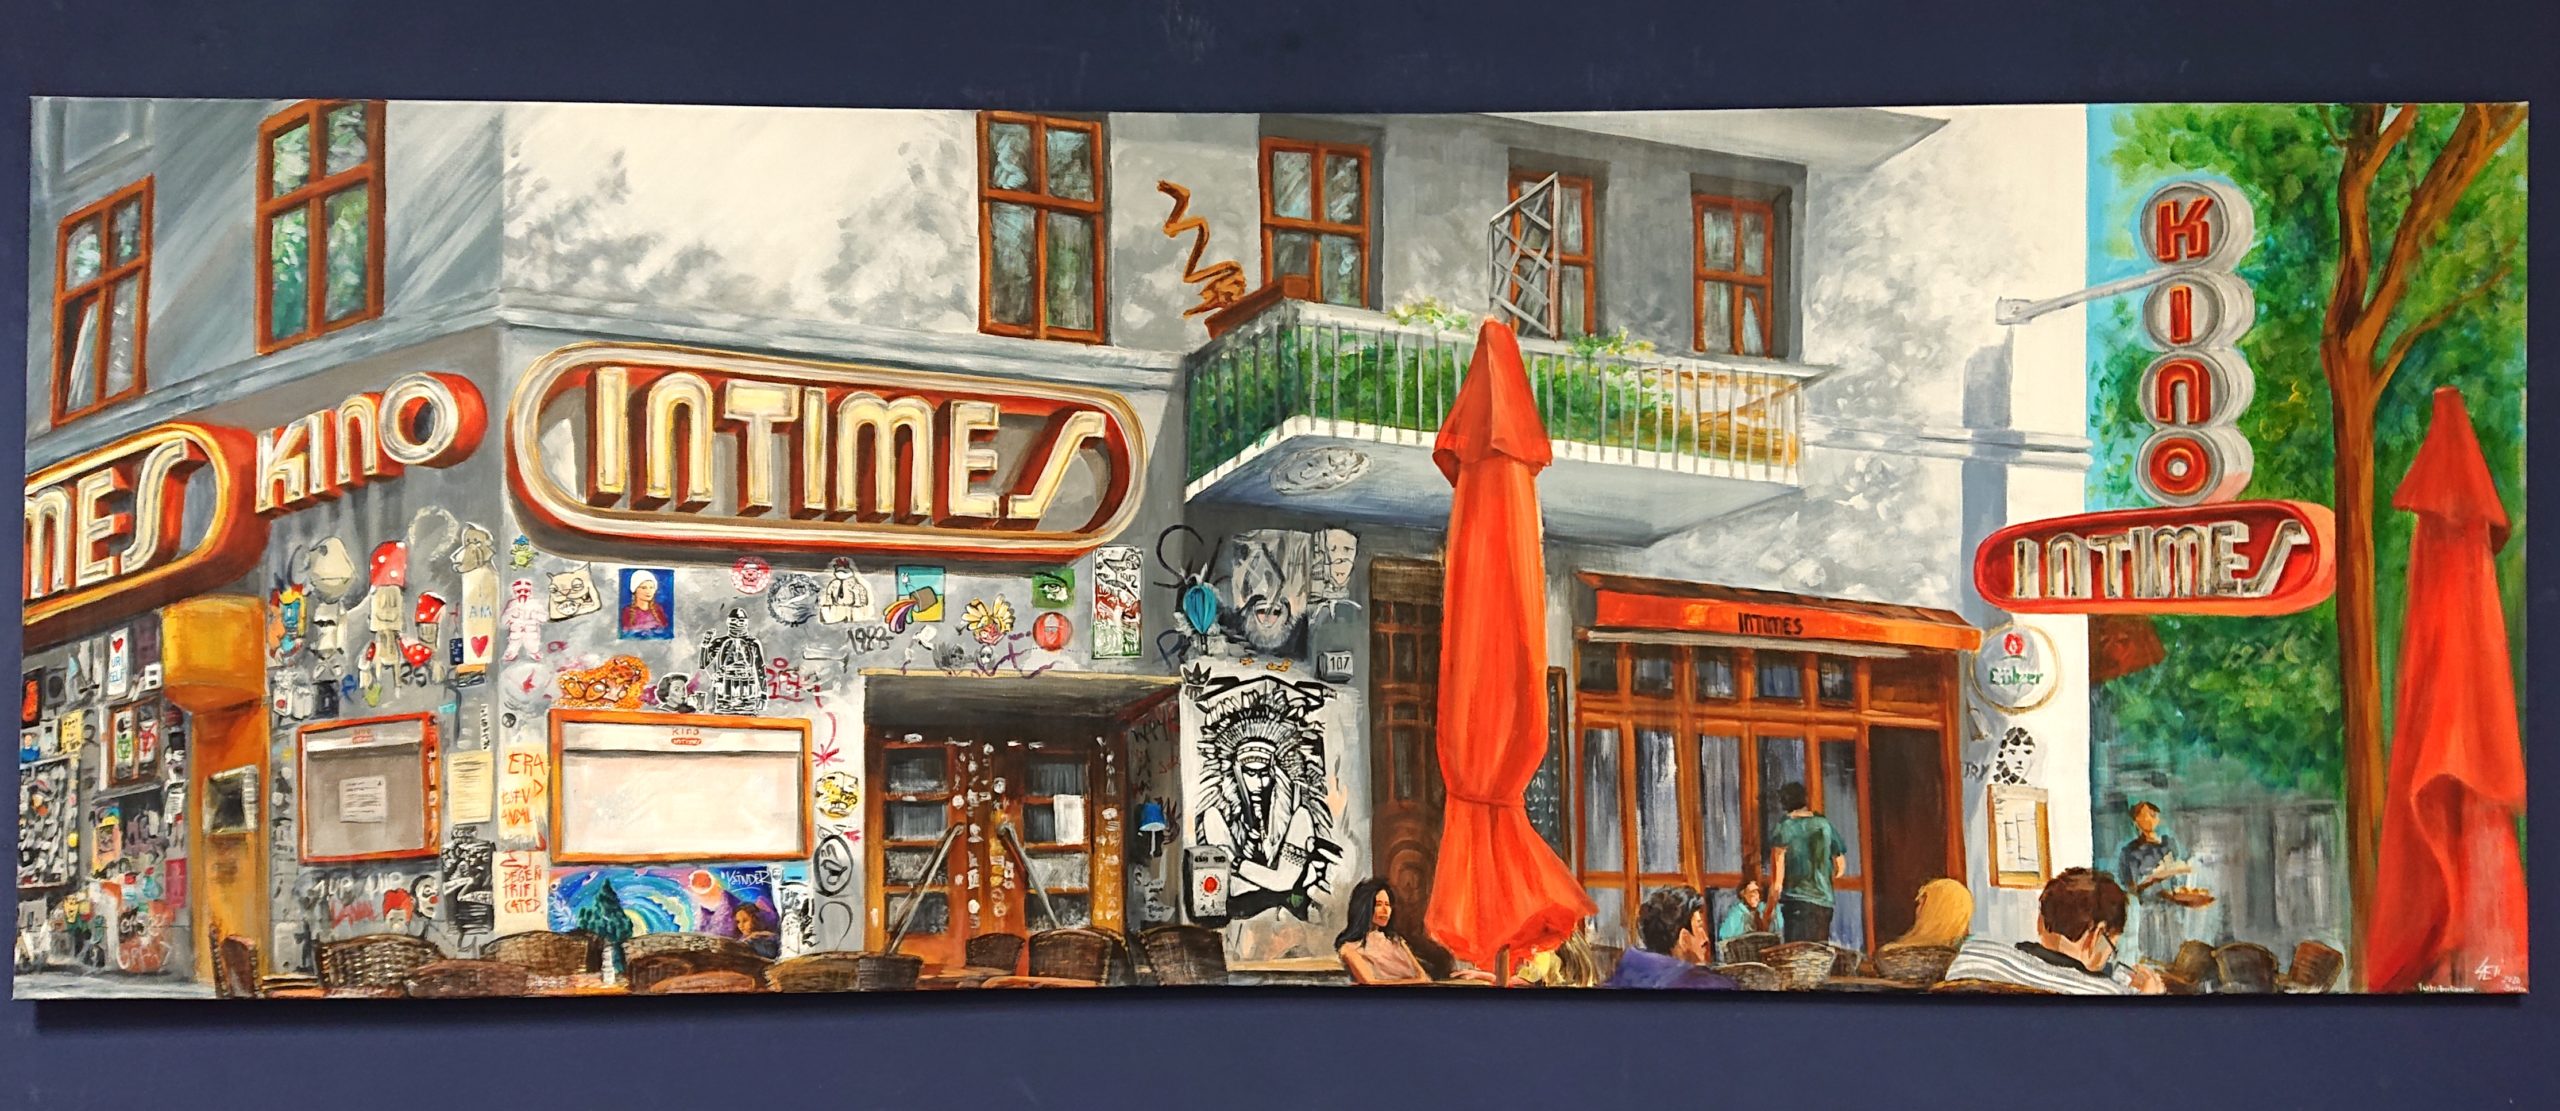 02.2020- Kino & Café Intimes bis (Acryl on canvas)